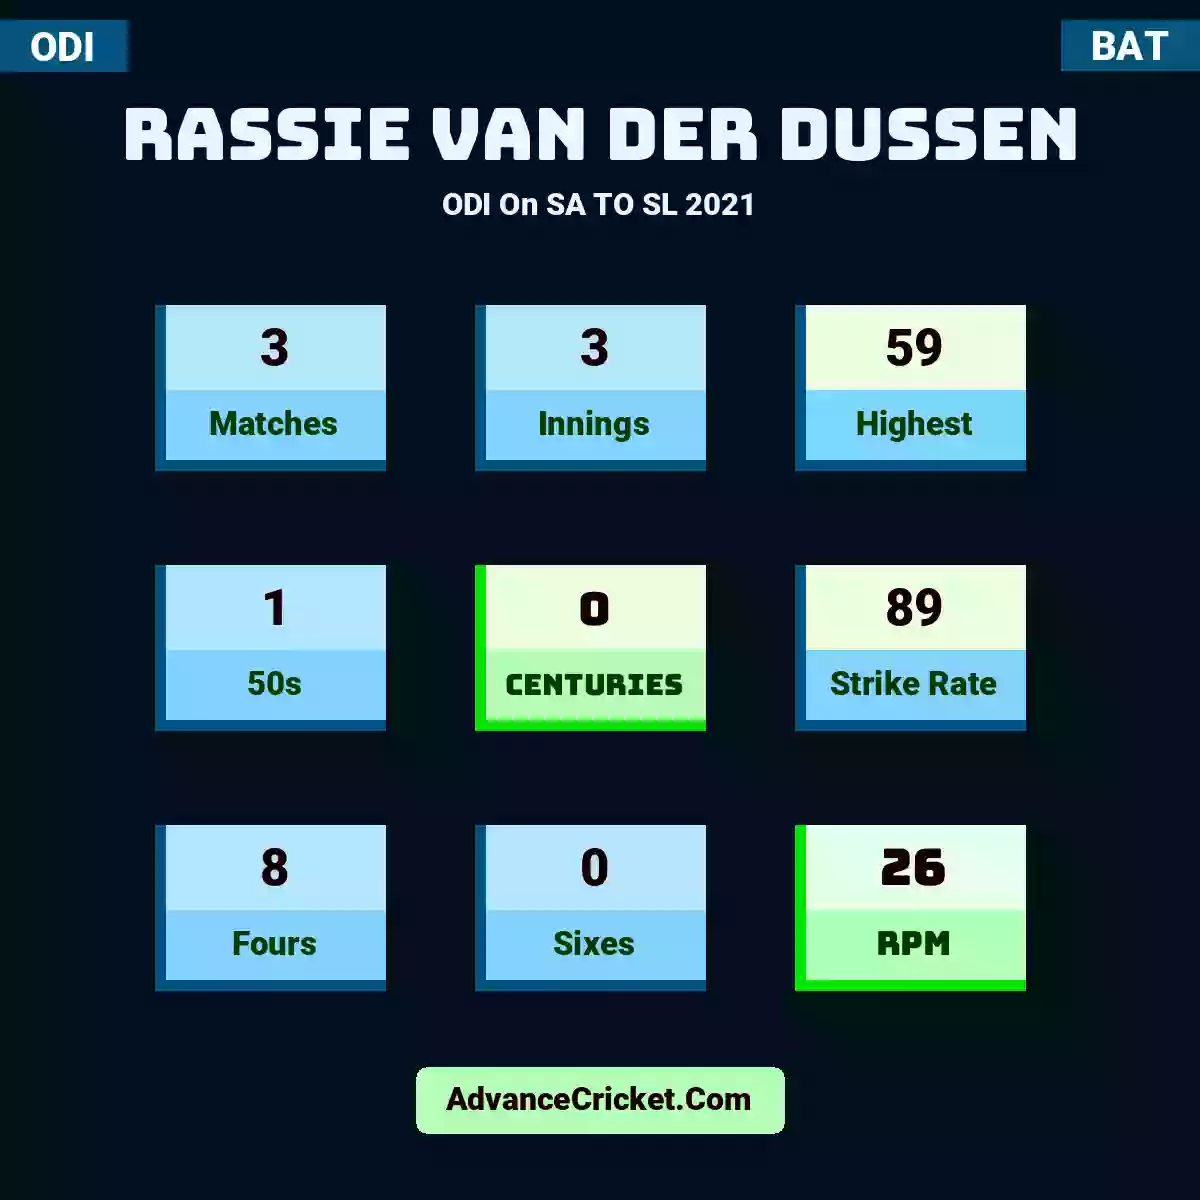 Rassie van der Dussen ODI  On SA TO SL 2021, Rassie van der Dussen played 3 matches, scored 59 runs as highest, 1 half-centuries, and 0 centuries, with a strike rate of 89. R.Dussen hit 8 fours and 0 sixes, with an RPM of 26.